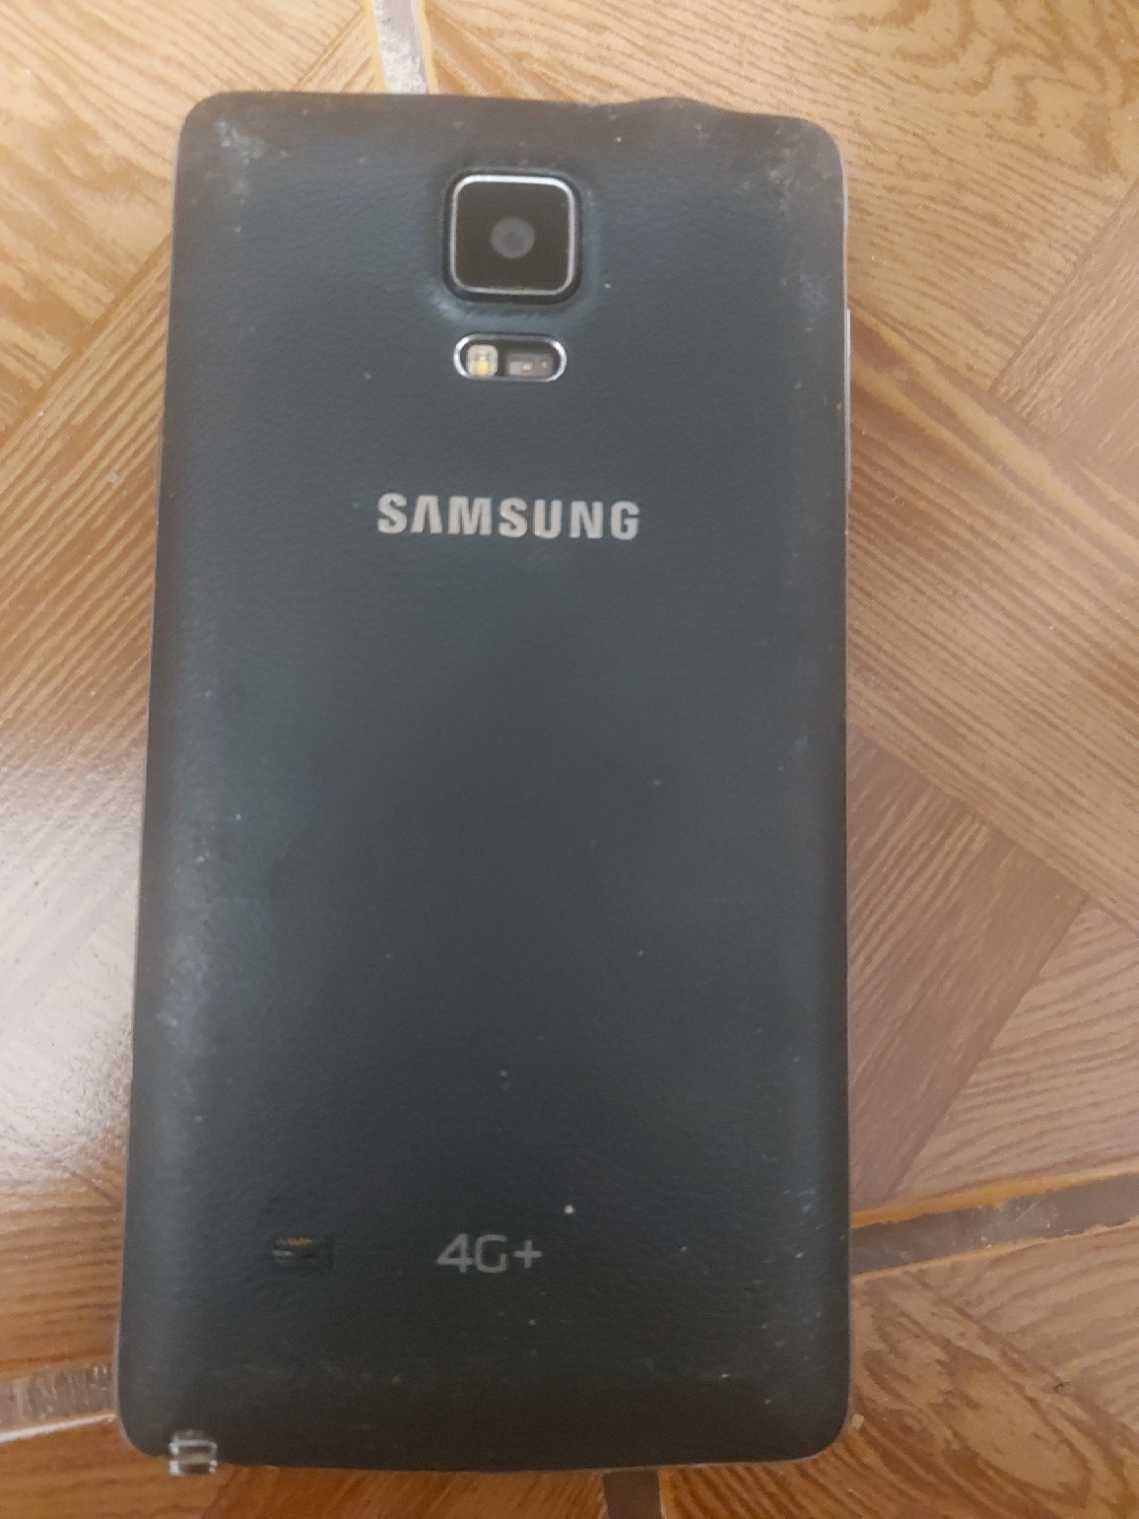 Samsung Note 4
Model SM-N910G